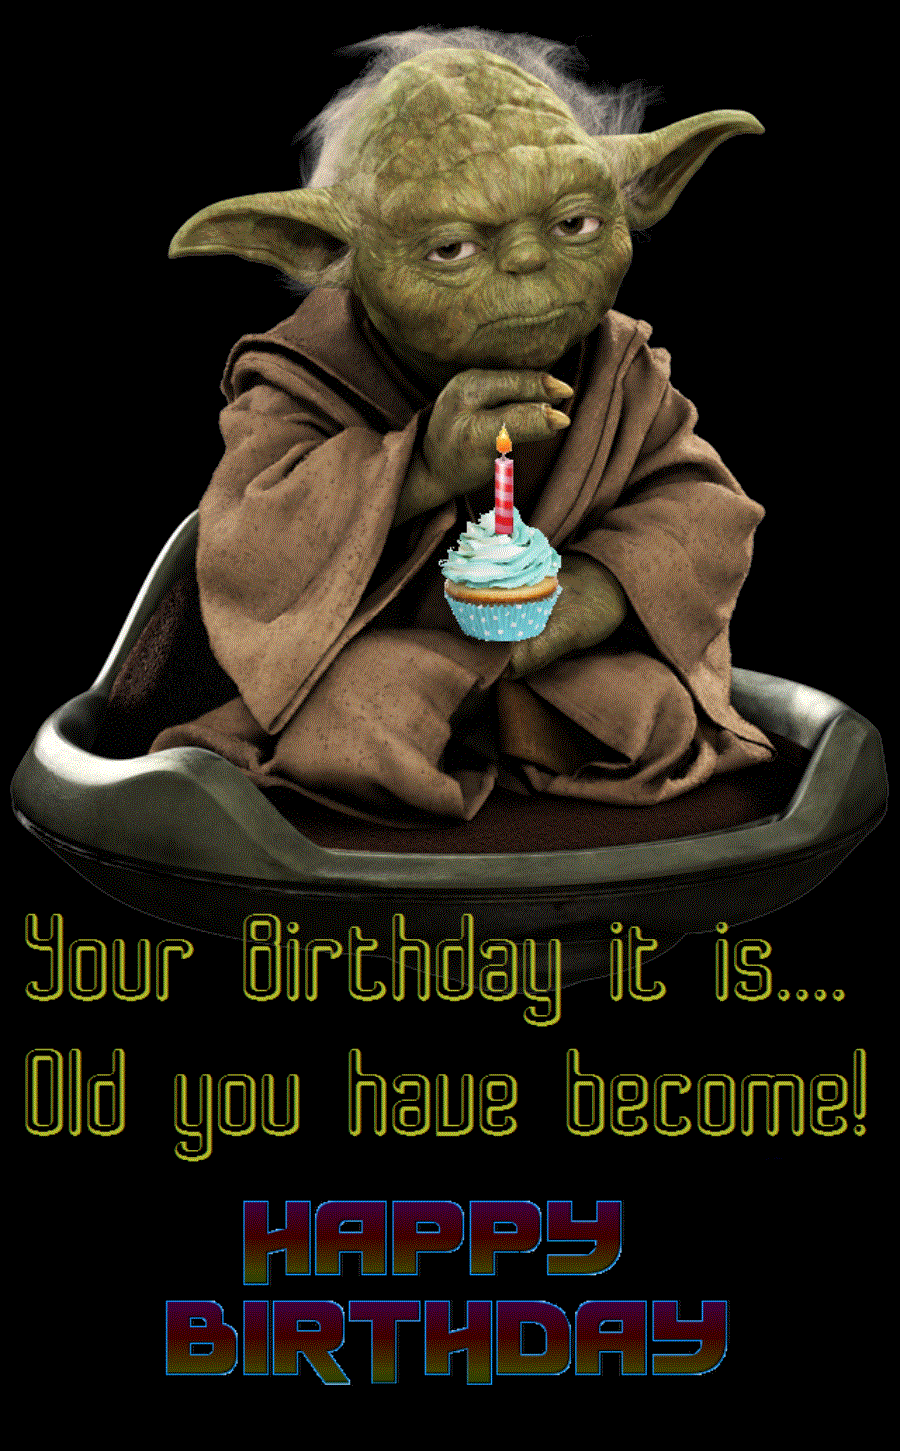 Happy Birthday Yoda Star Wars Meme Funny Images download.